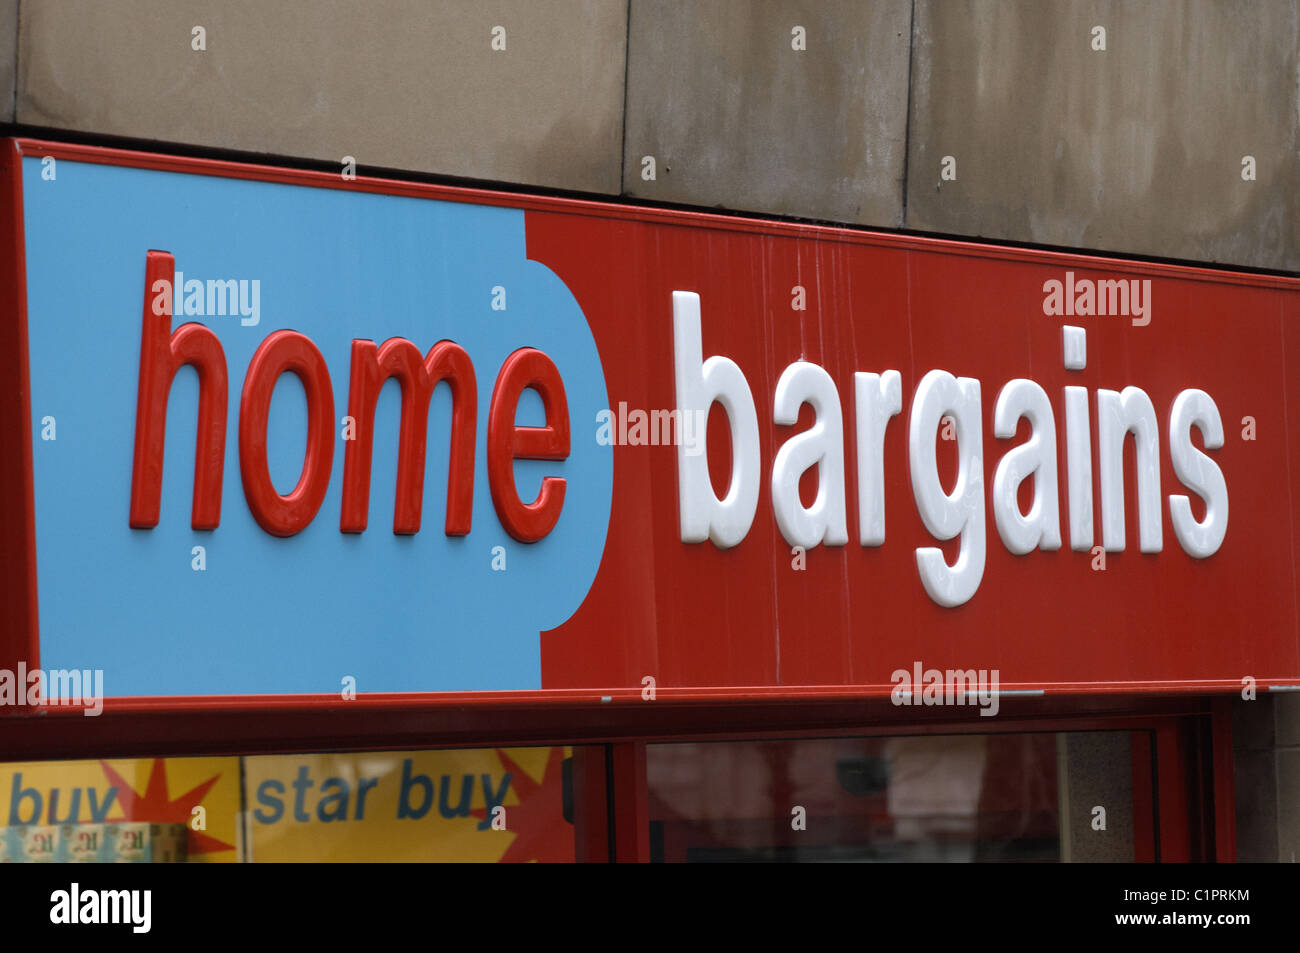 home bargains shop sign Stock Photo